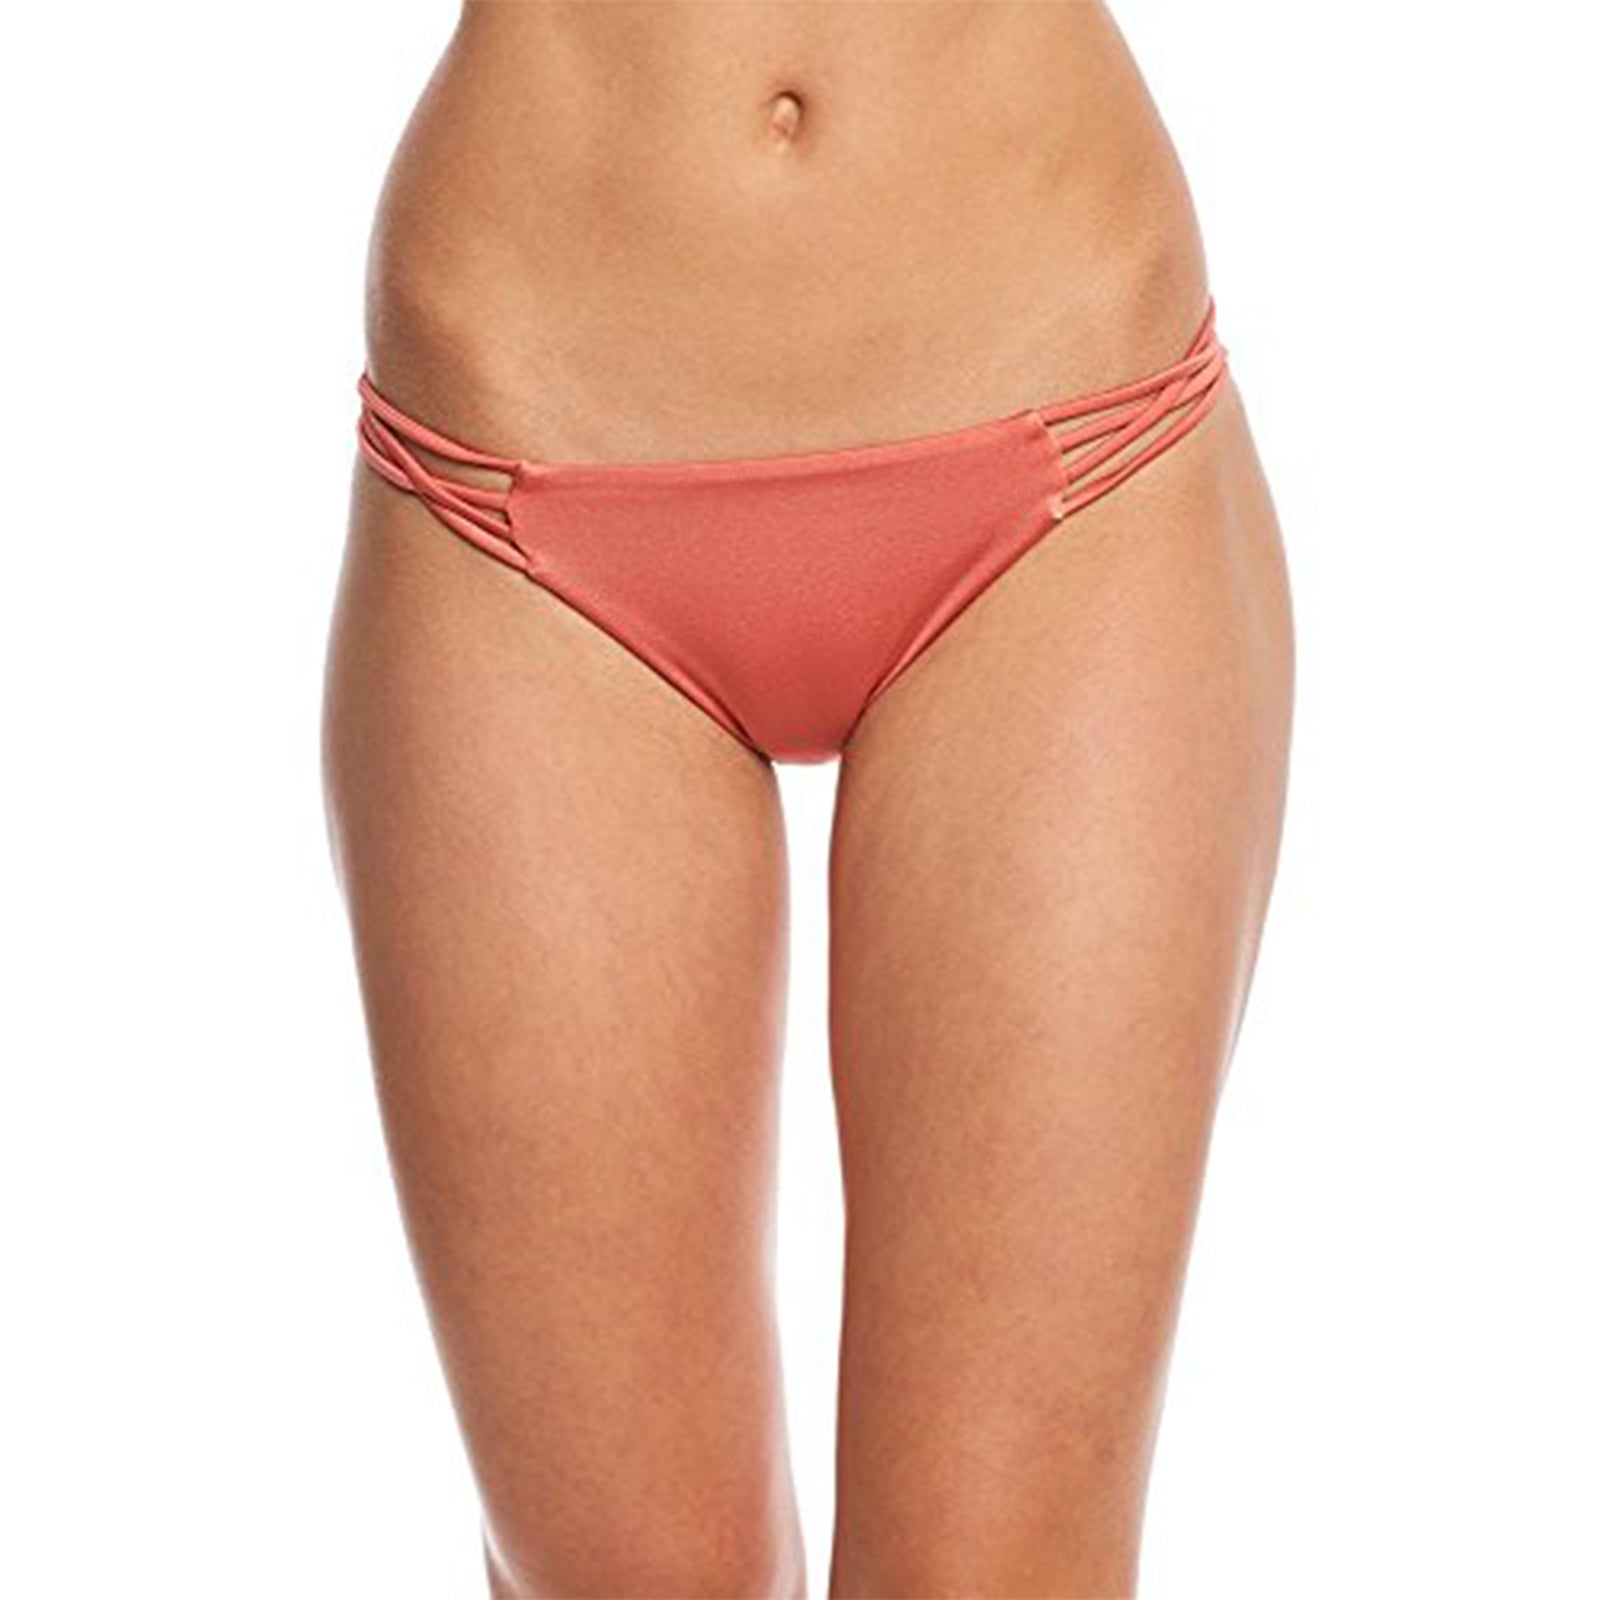 Billabong Standard Sol Searcher Tropic Women's Bottom Swimwear-XB01NBSO